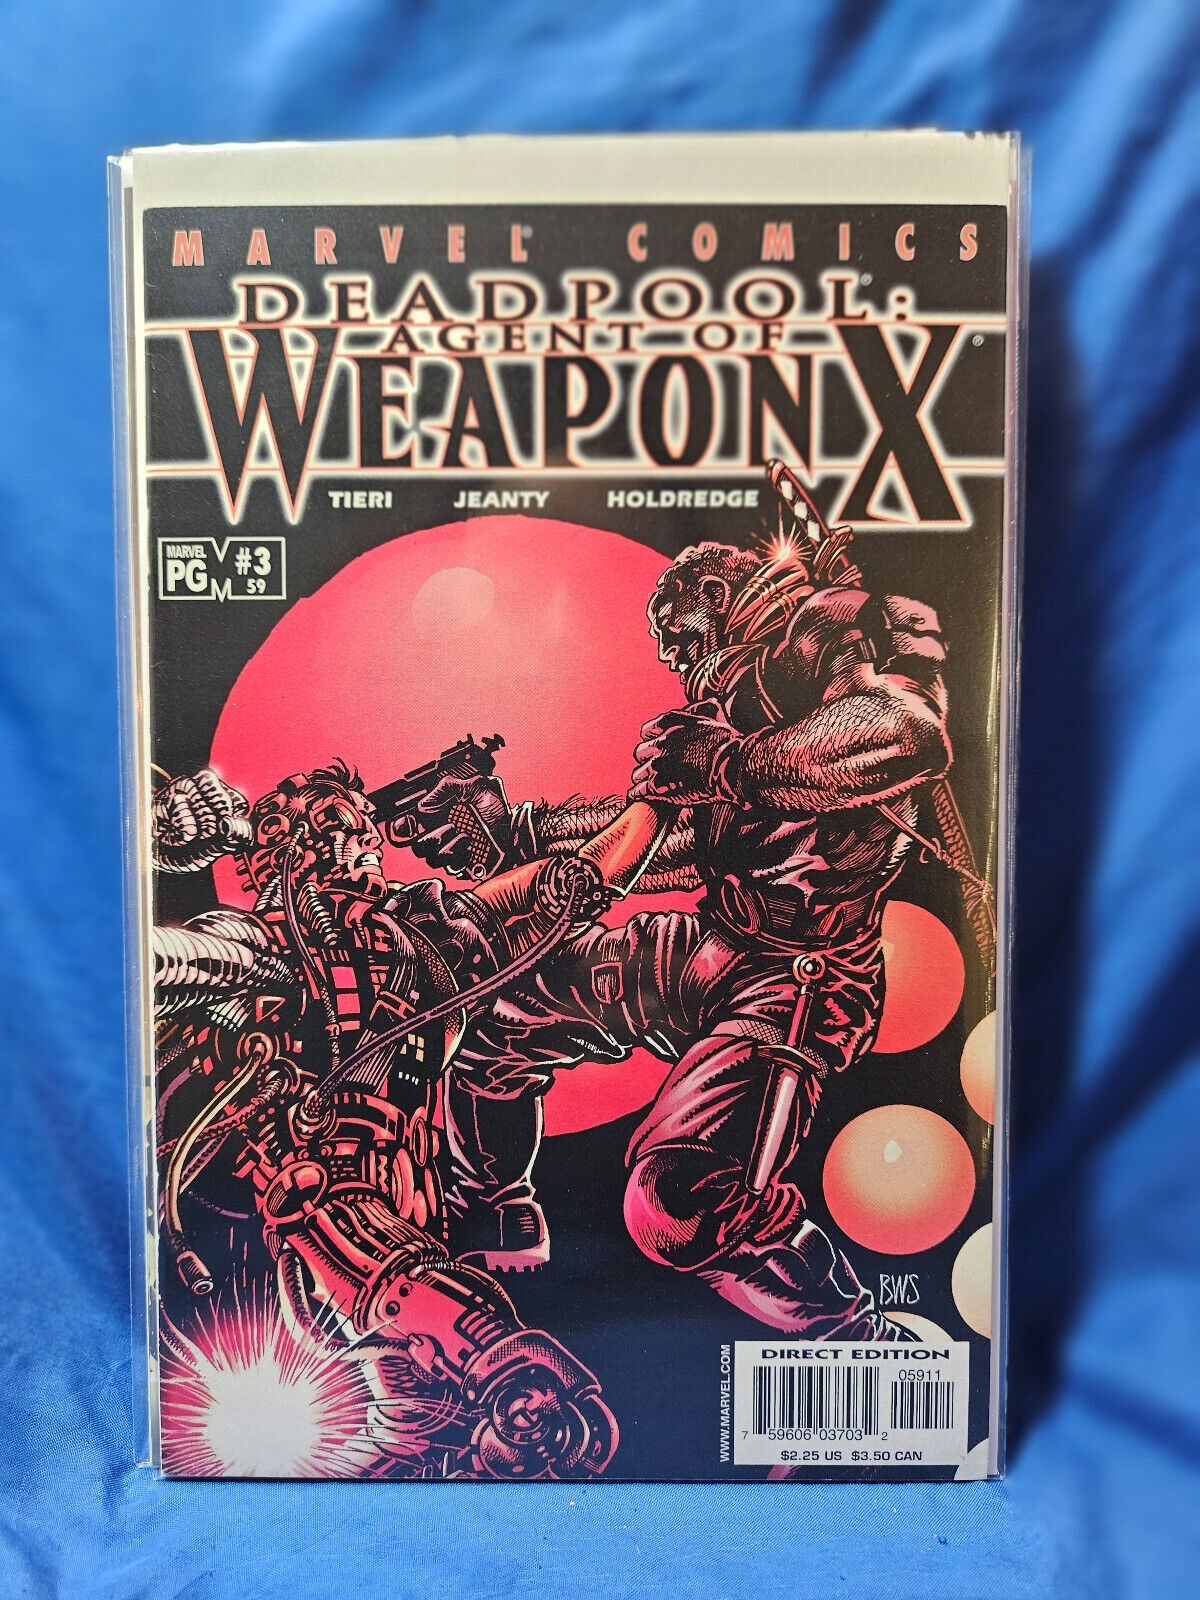 Deadpool #59 (2001 Marvel Comics) Agent of Weapon X #3 VF/NM